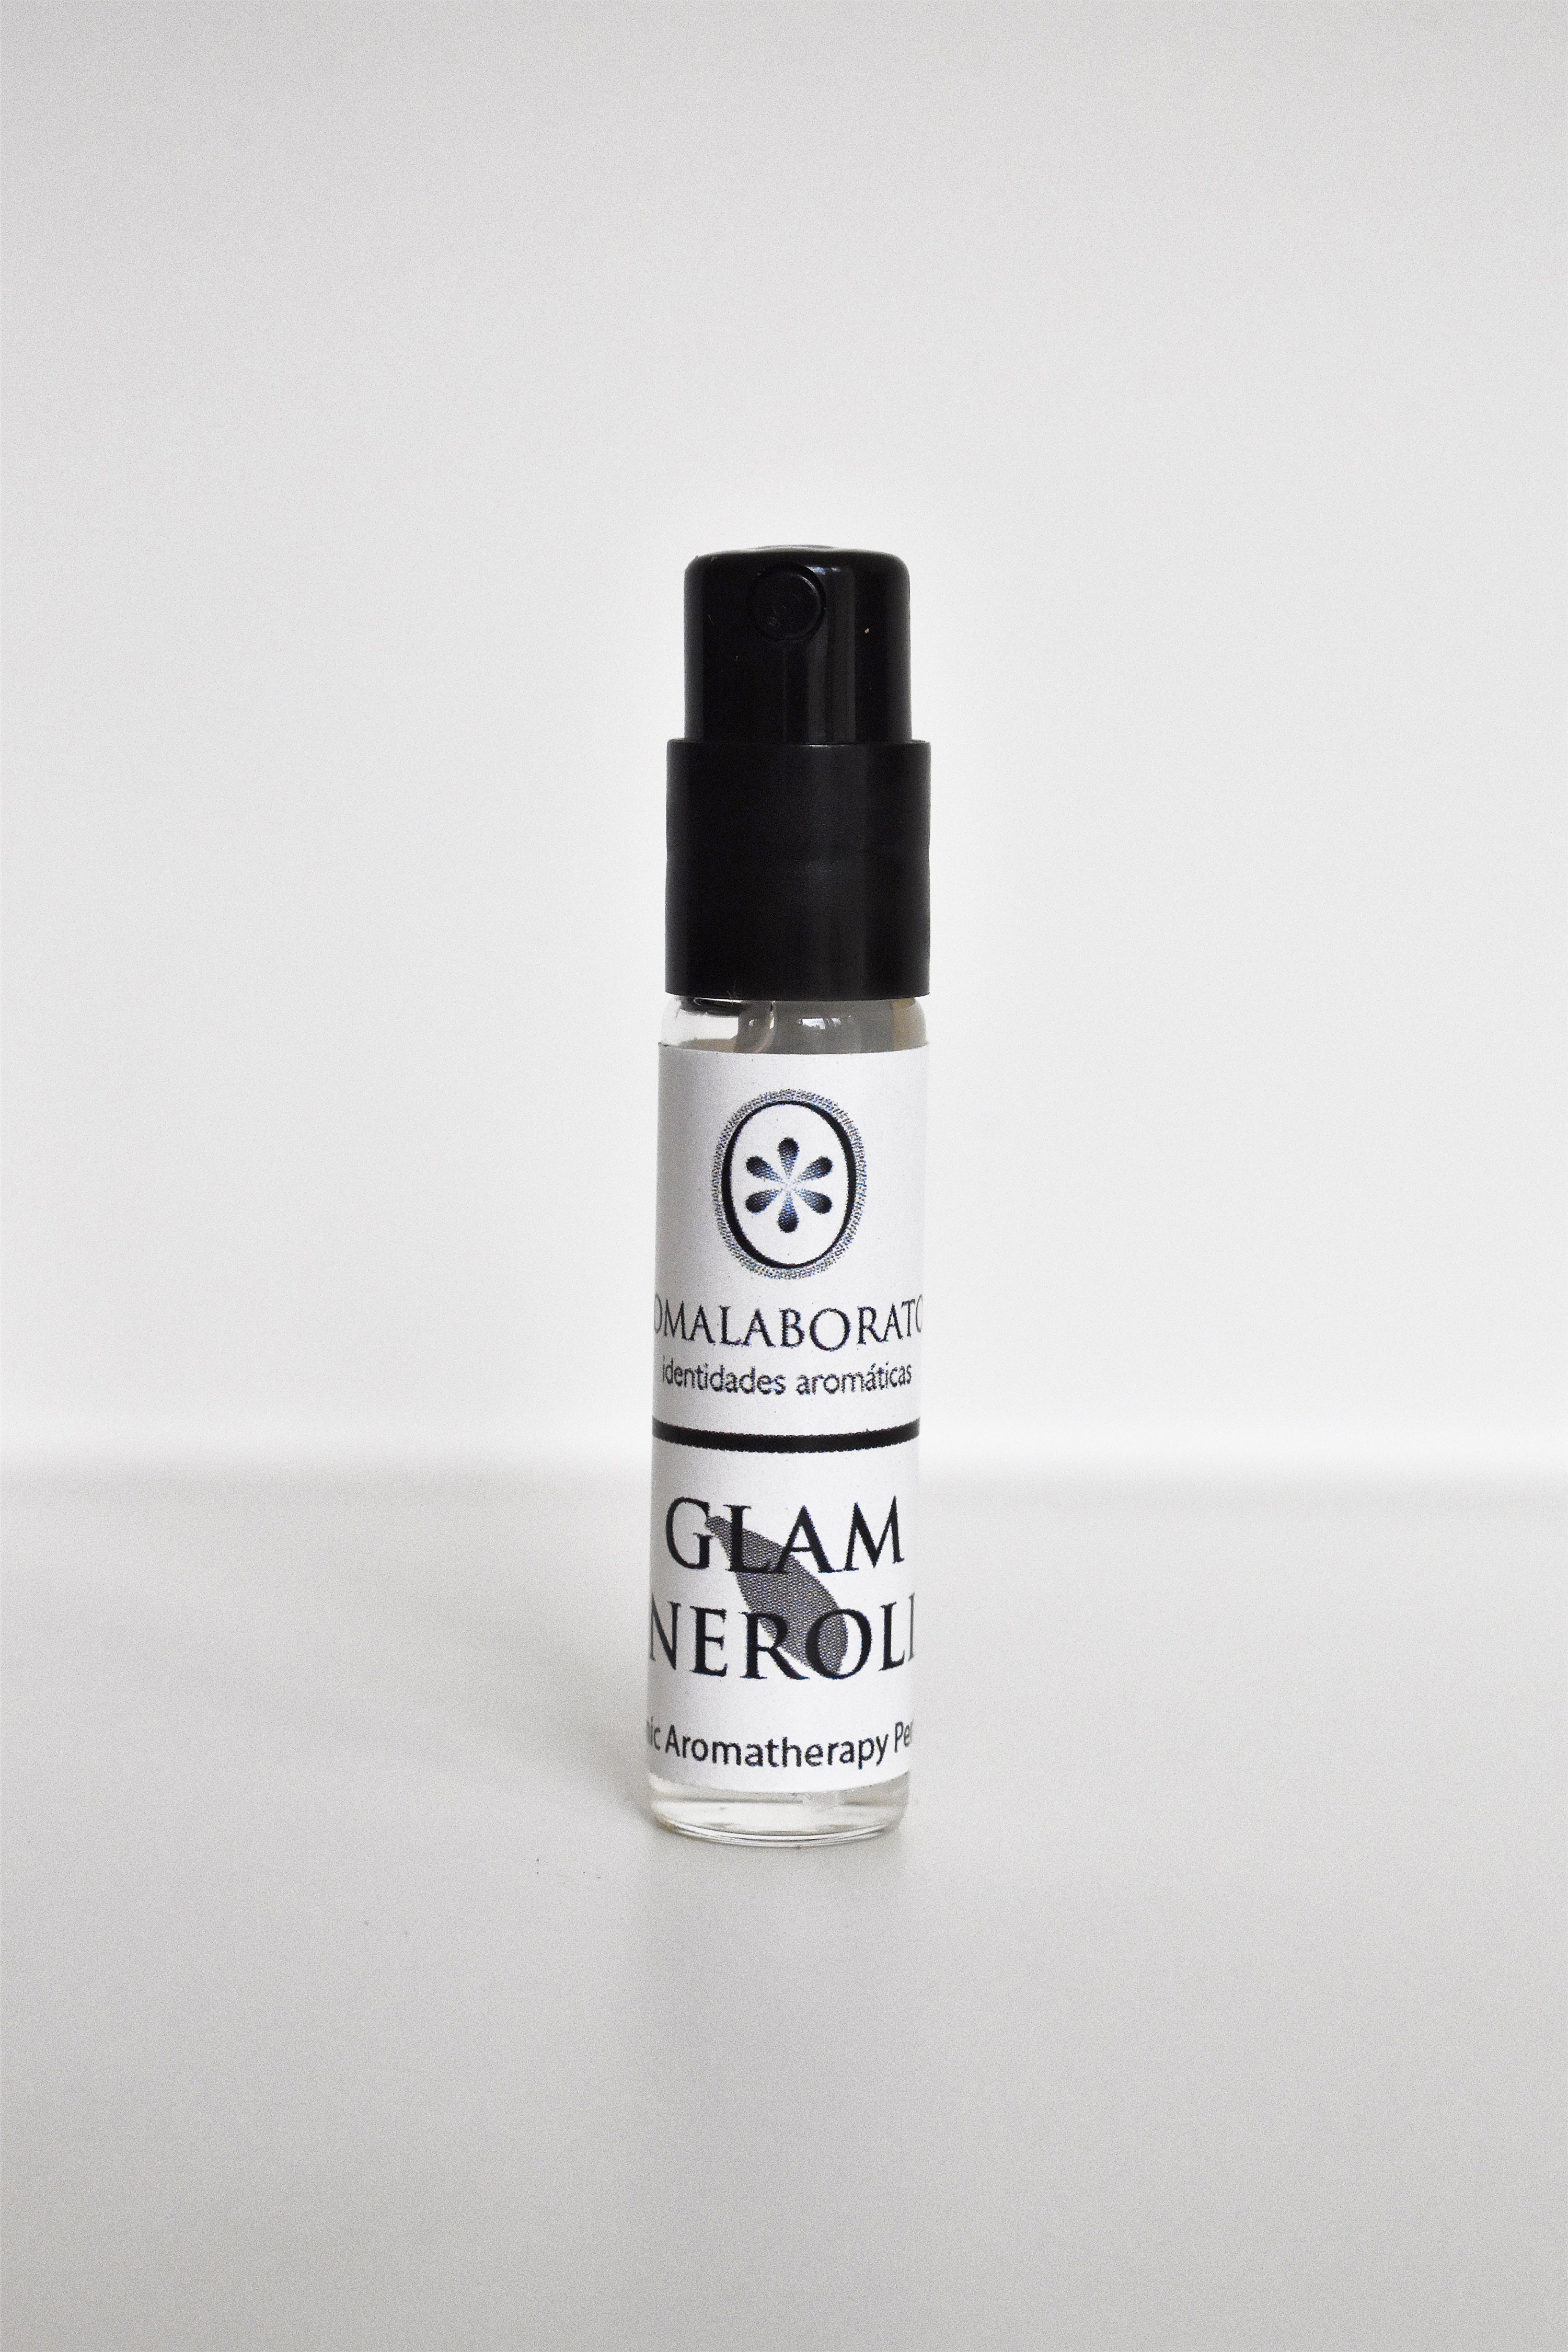 GLAM NEROLI. Aromatherapy Clean Perfume. Organic. 2ml.